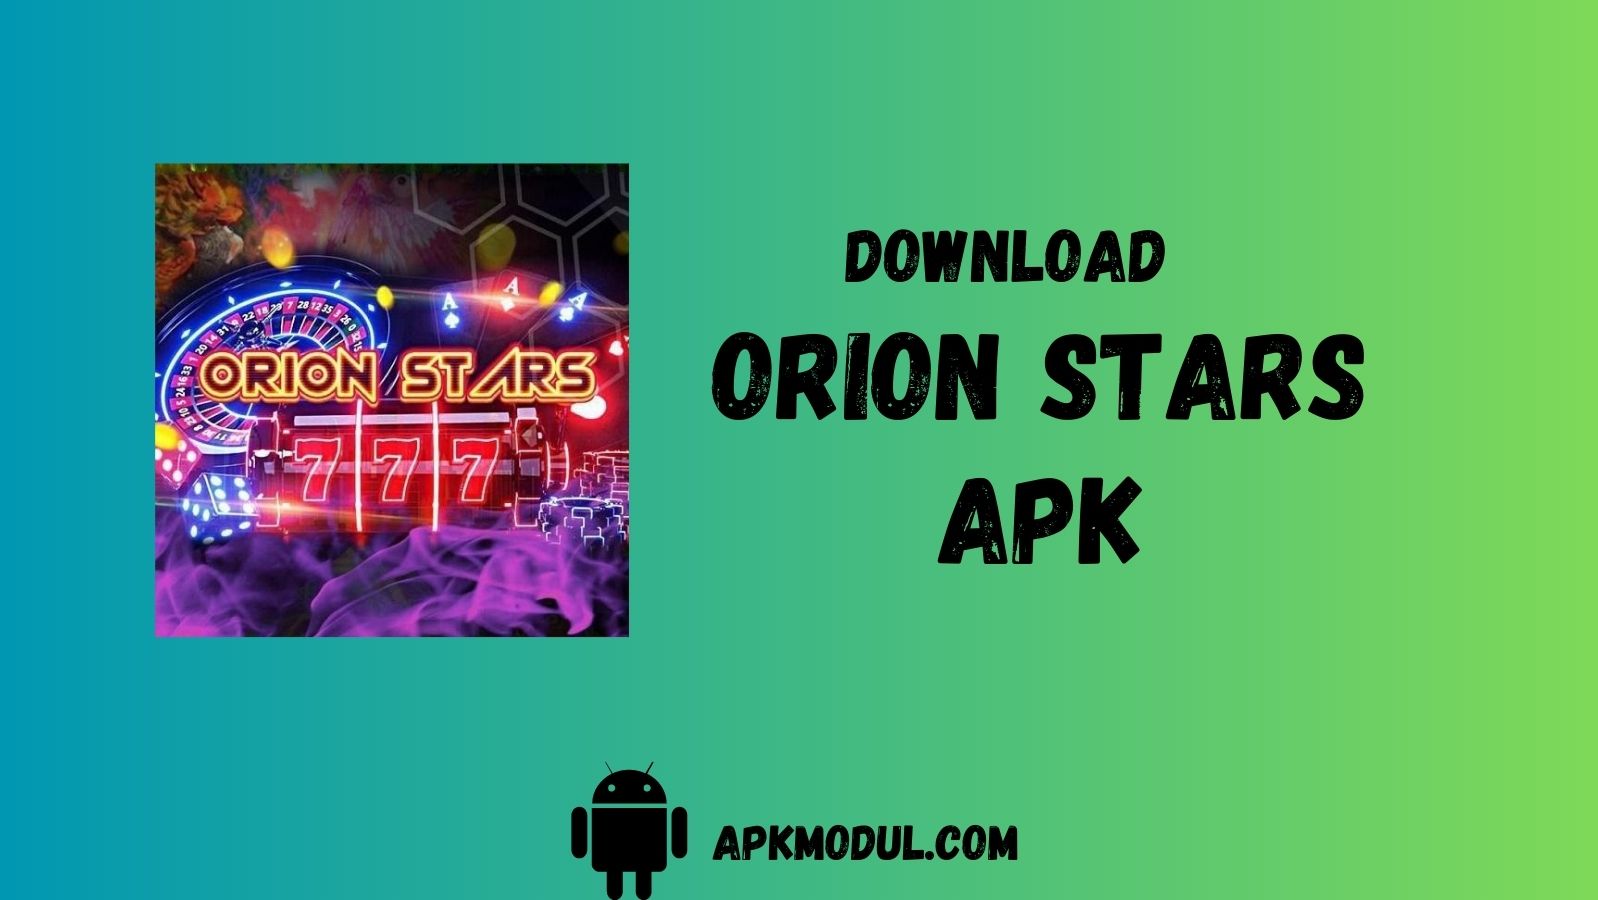 Orion stars apk